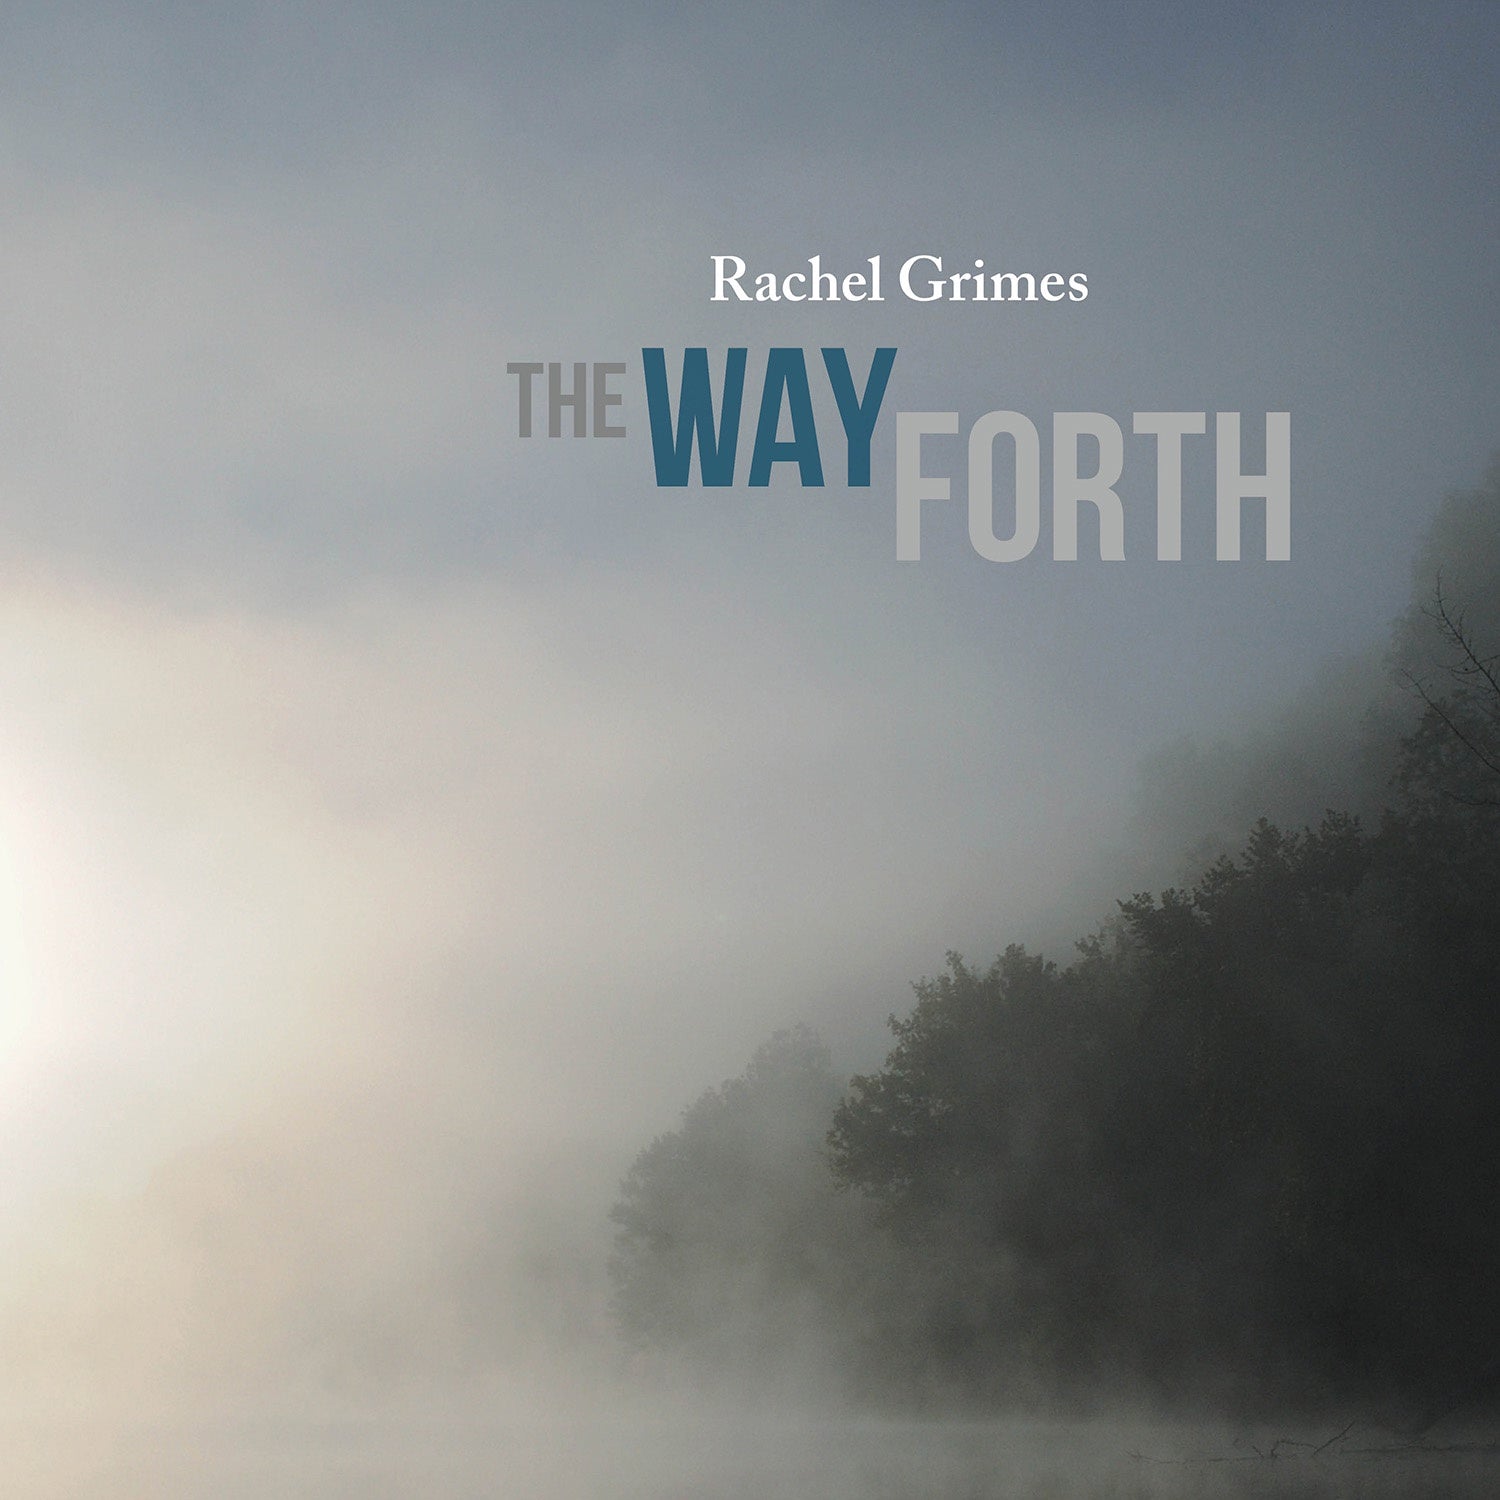 Rachel Grimes - The Way Forth - New 2 LP Record 2019 Temporary Residence Ltd. USA Vinyl - Folk